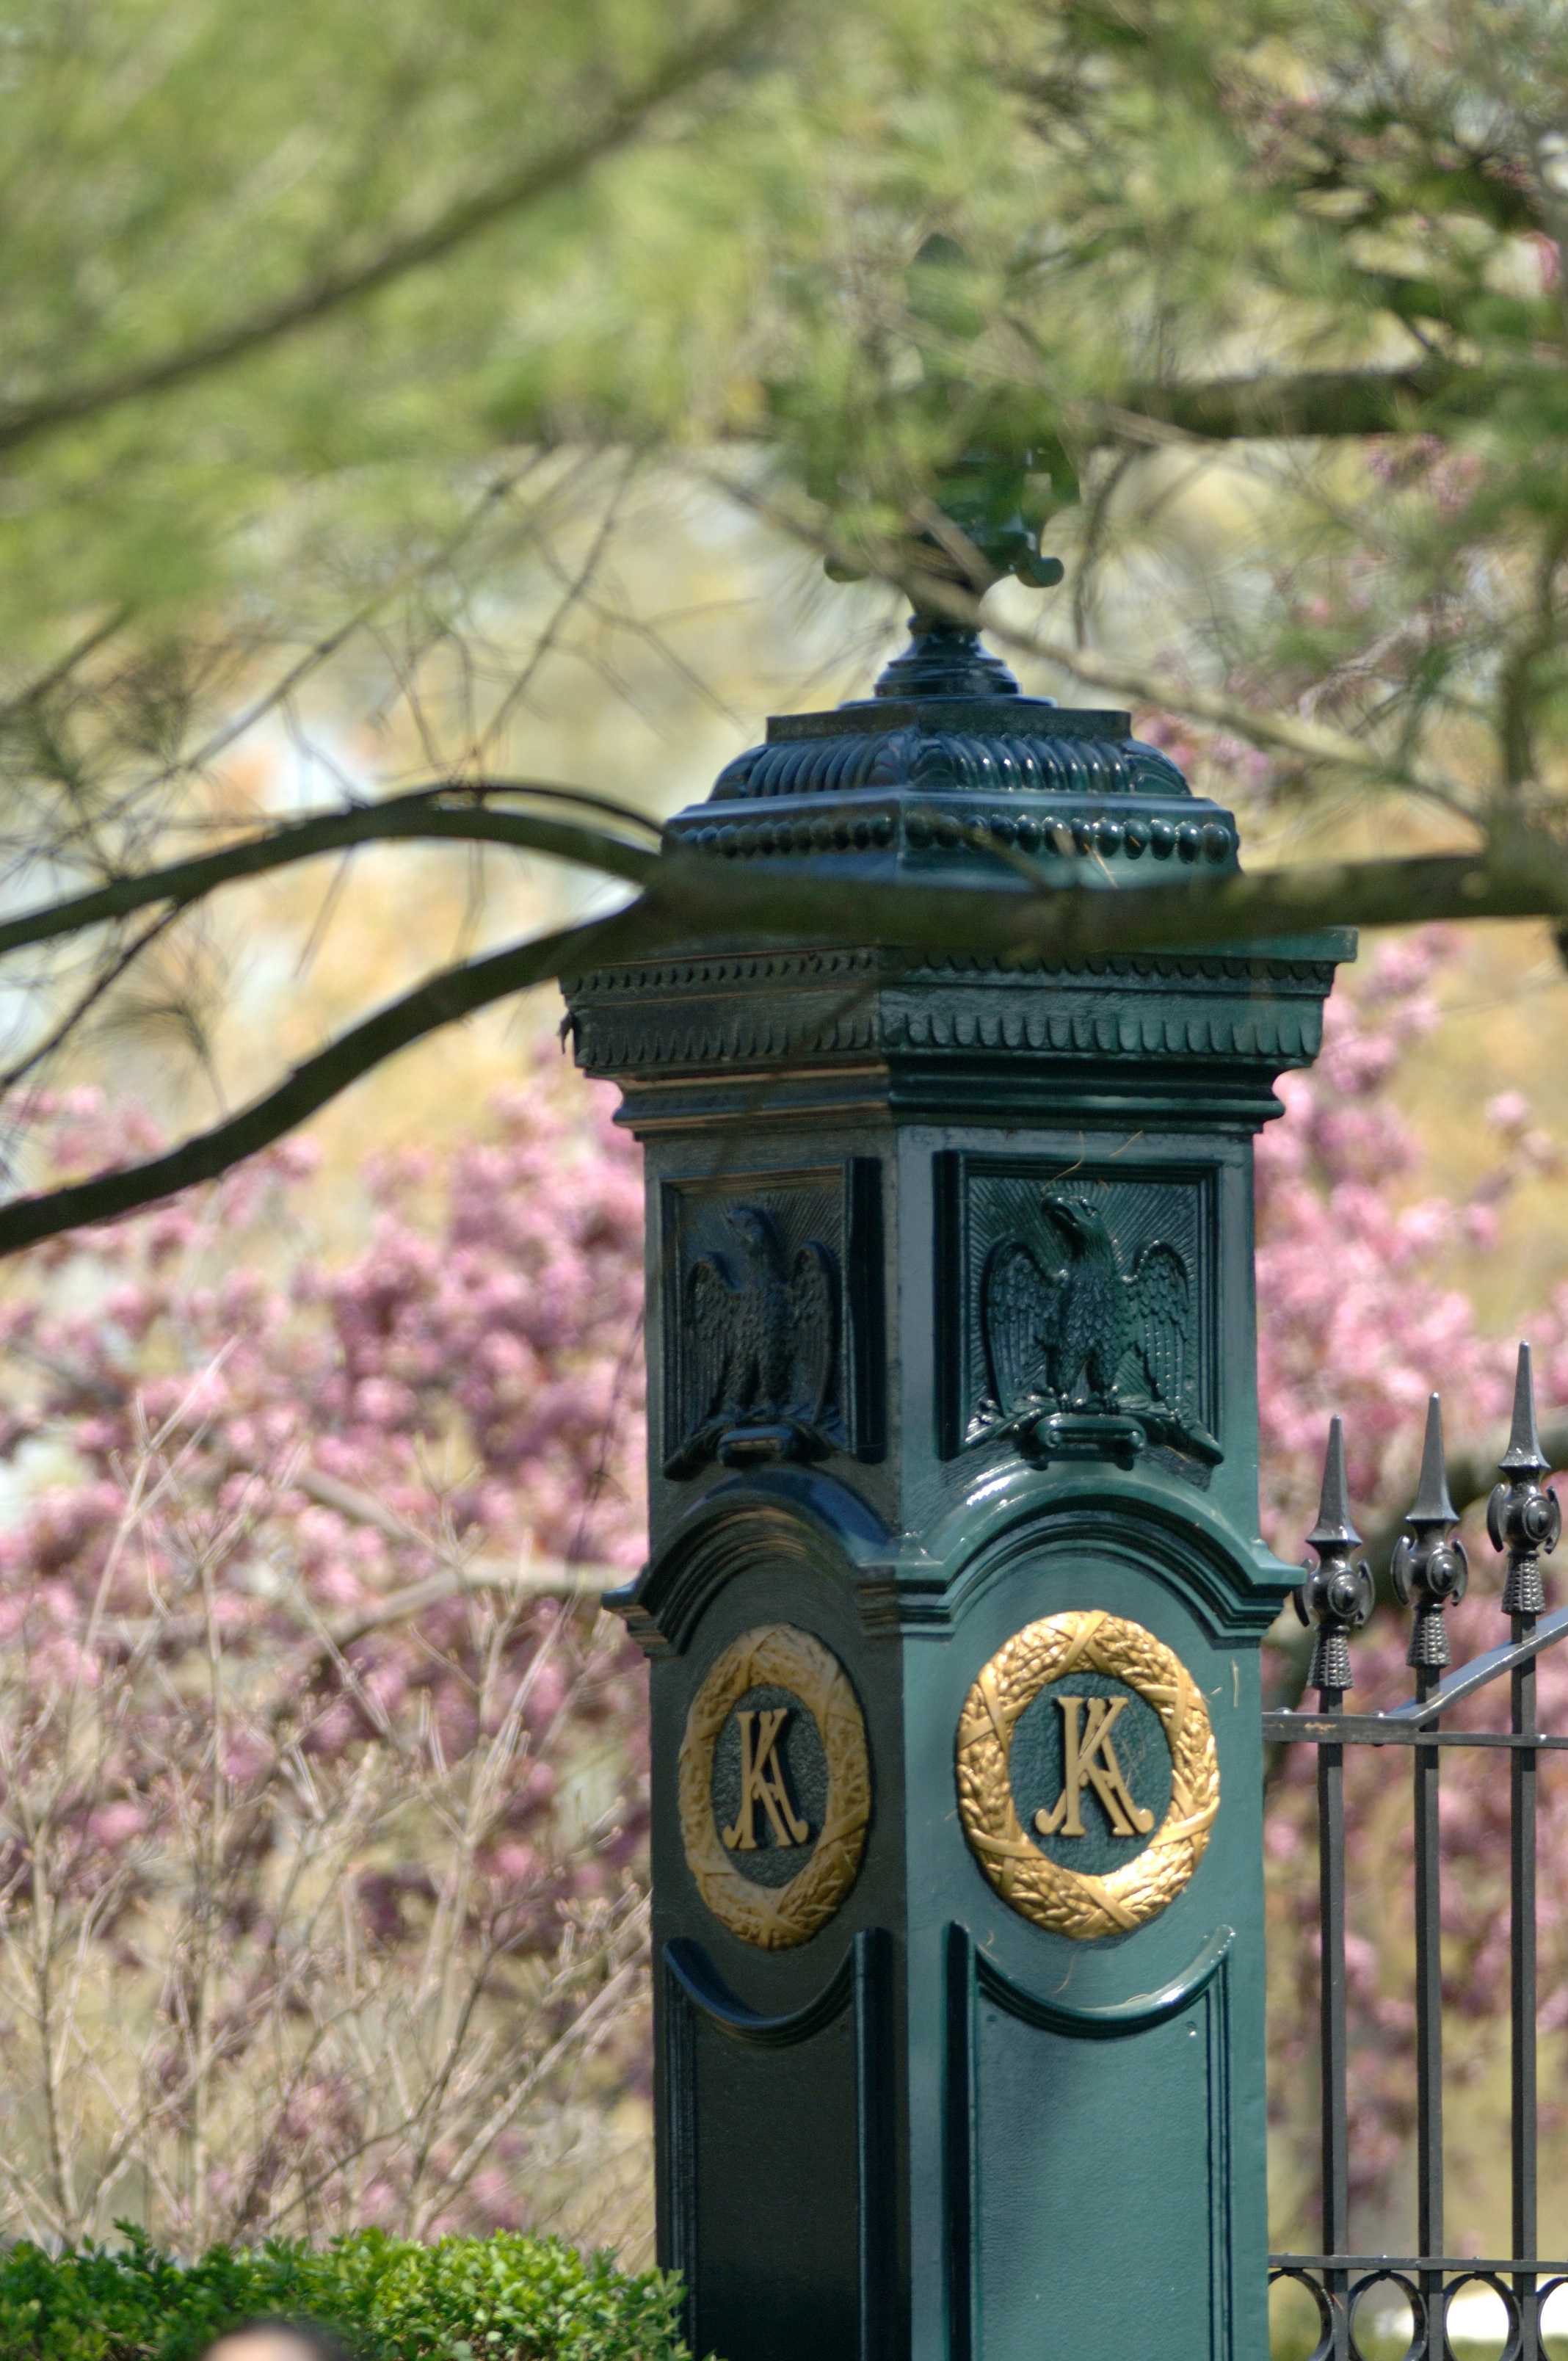 Green gate post with Keeneland emblem